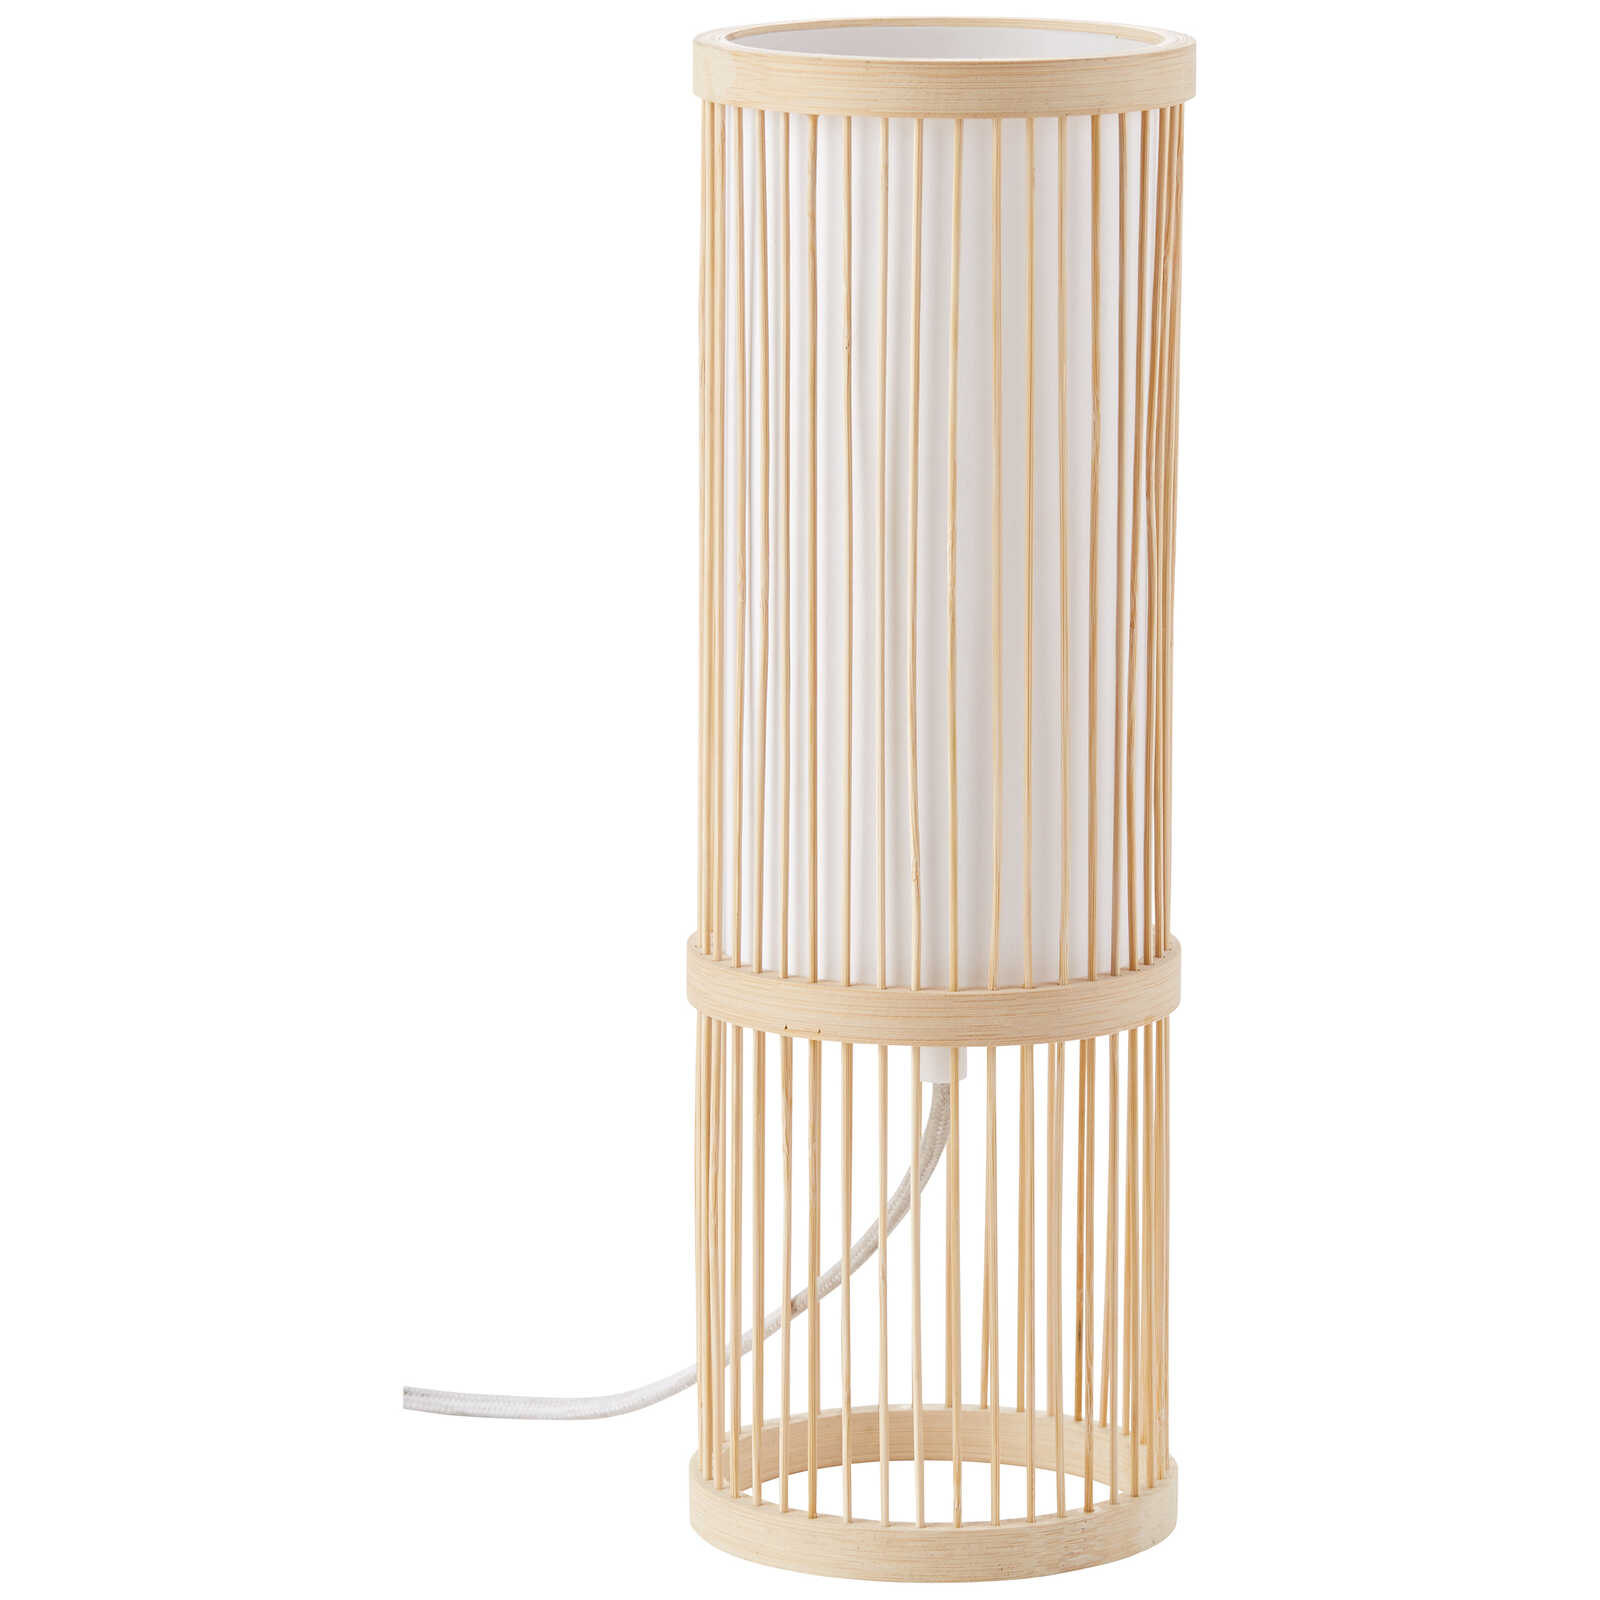             Lampada da tavolo in bambù - Luise 2 - Marrone
        